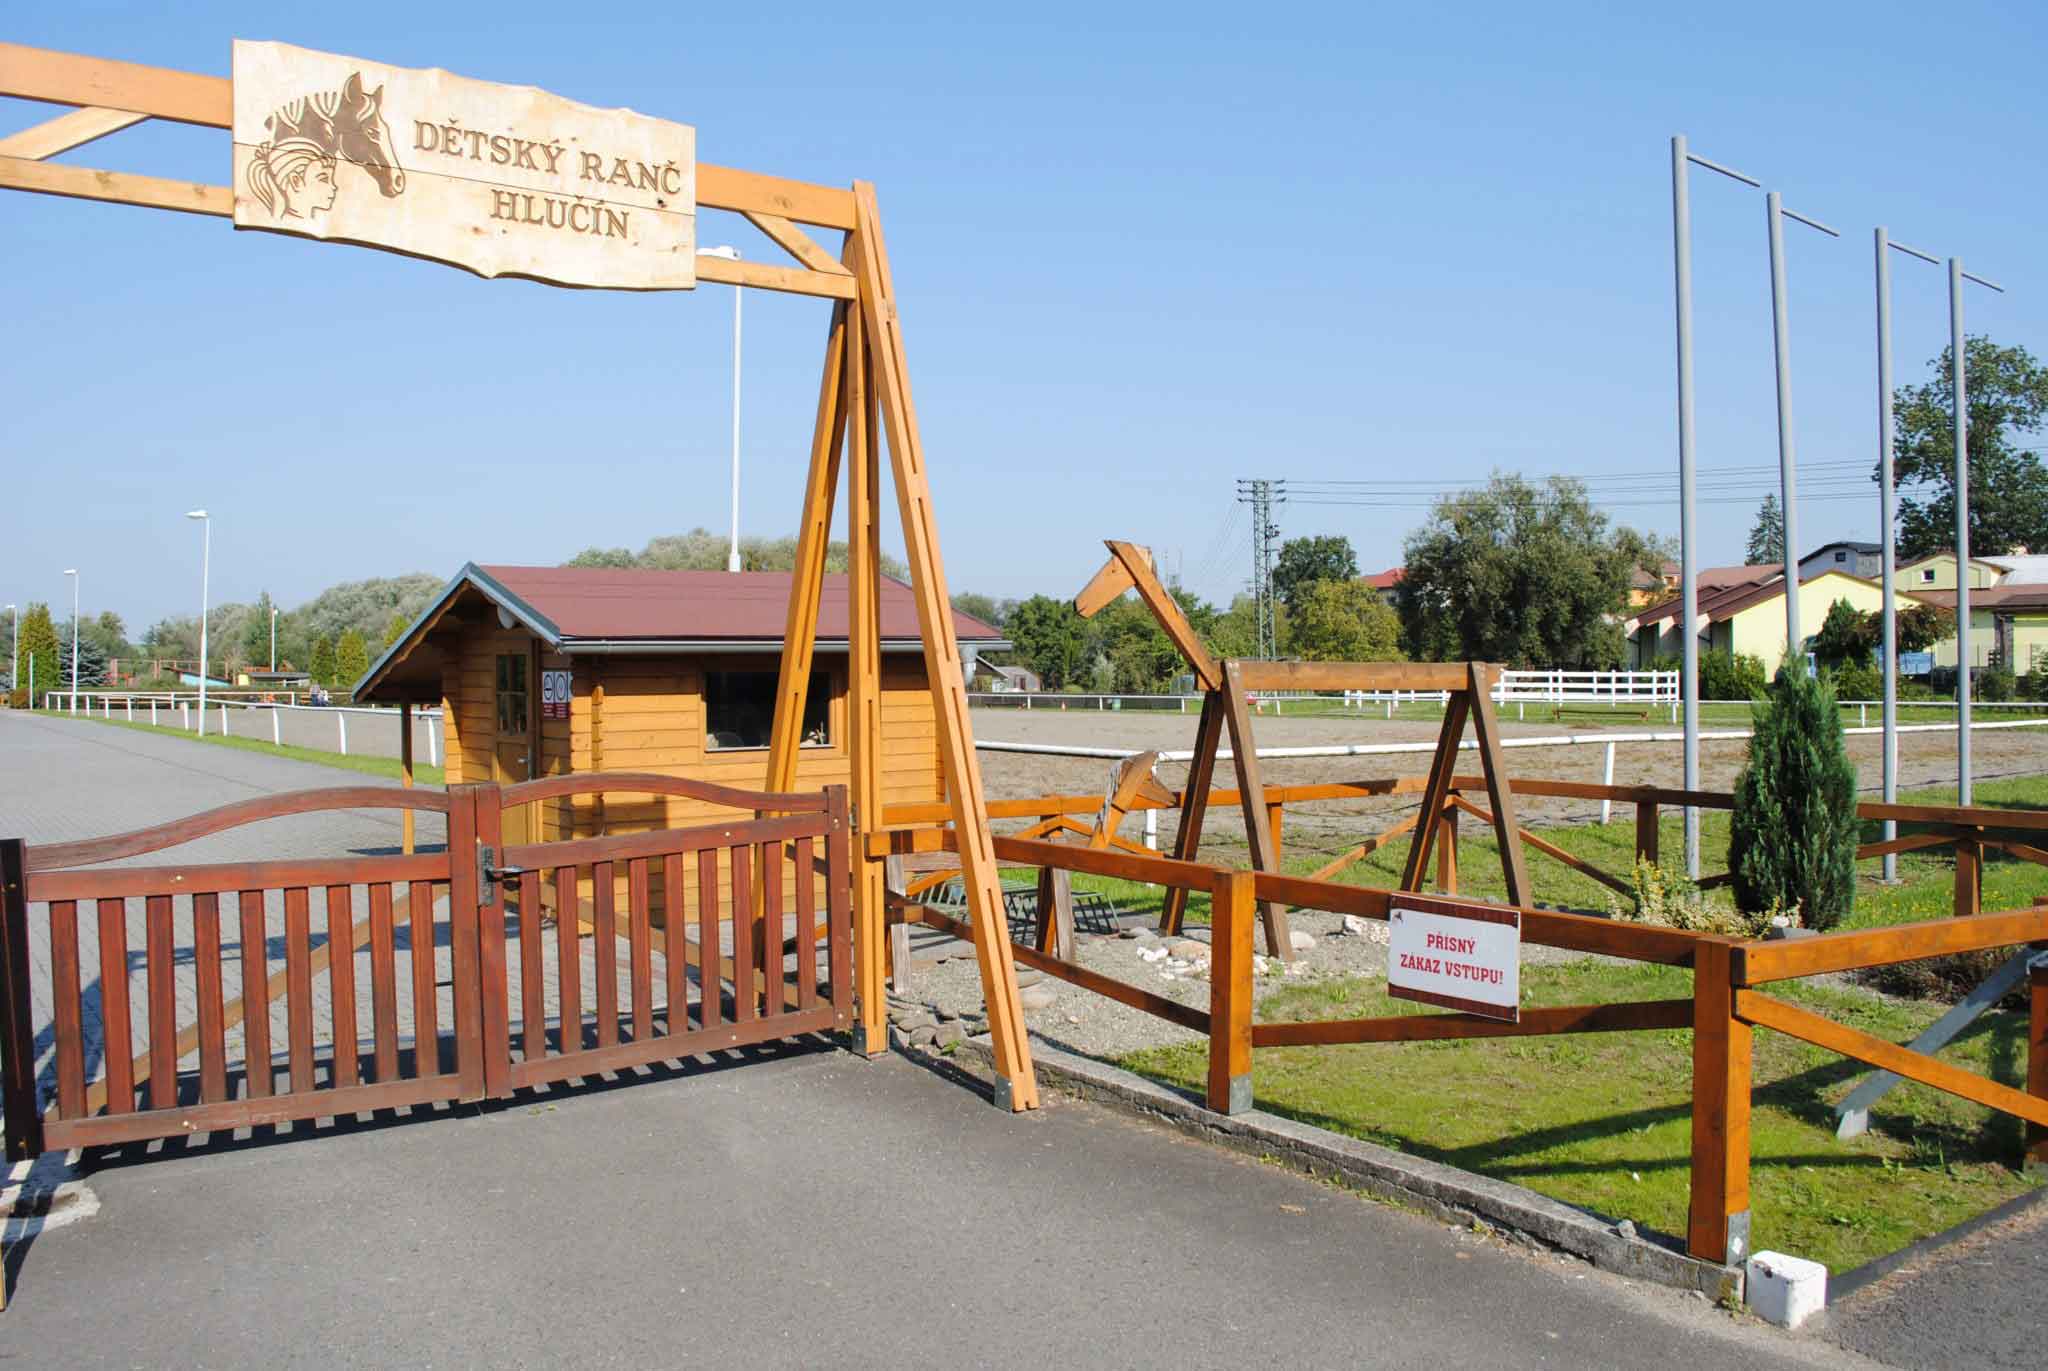 Dětský ranč Hlučín